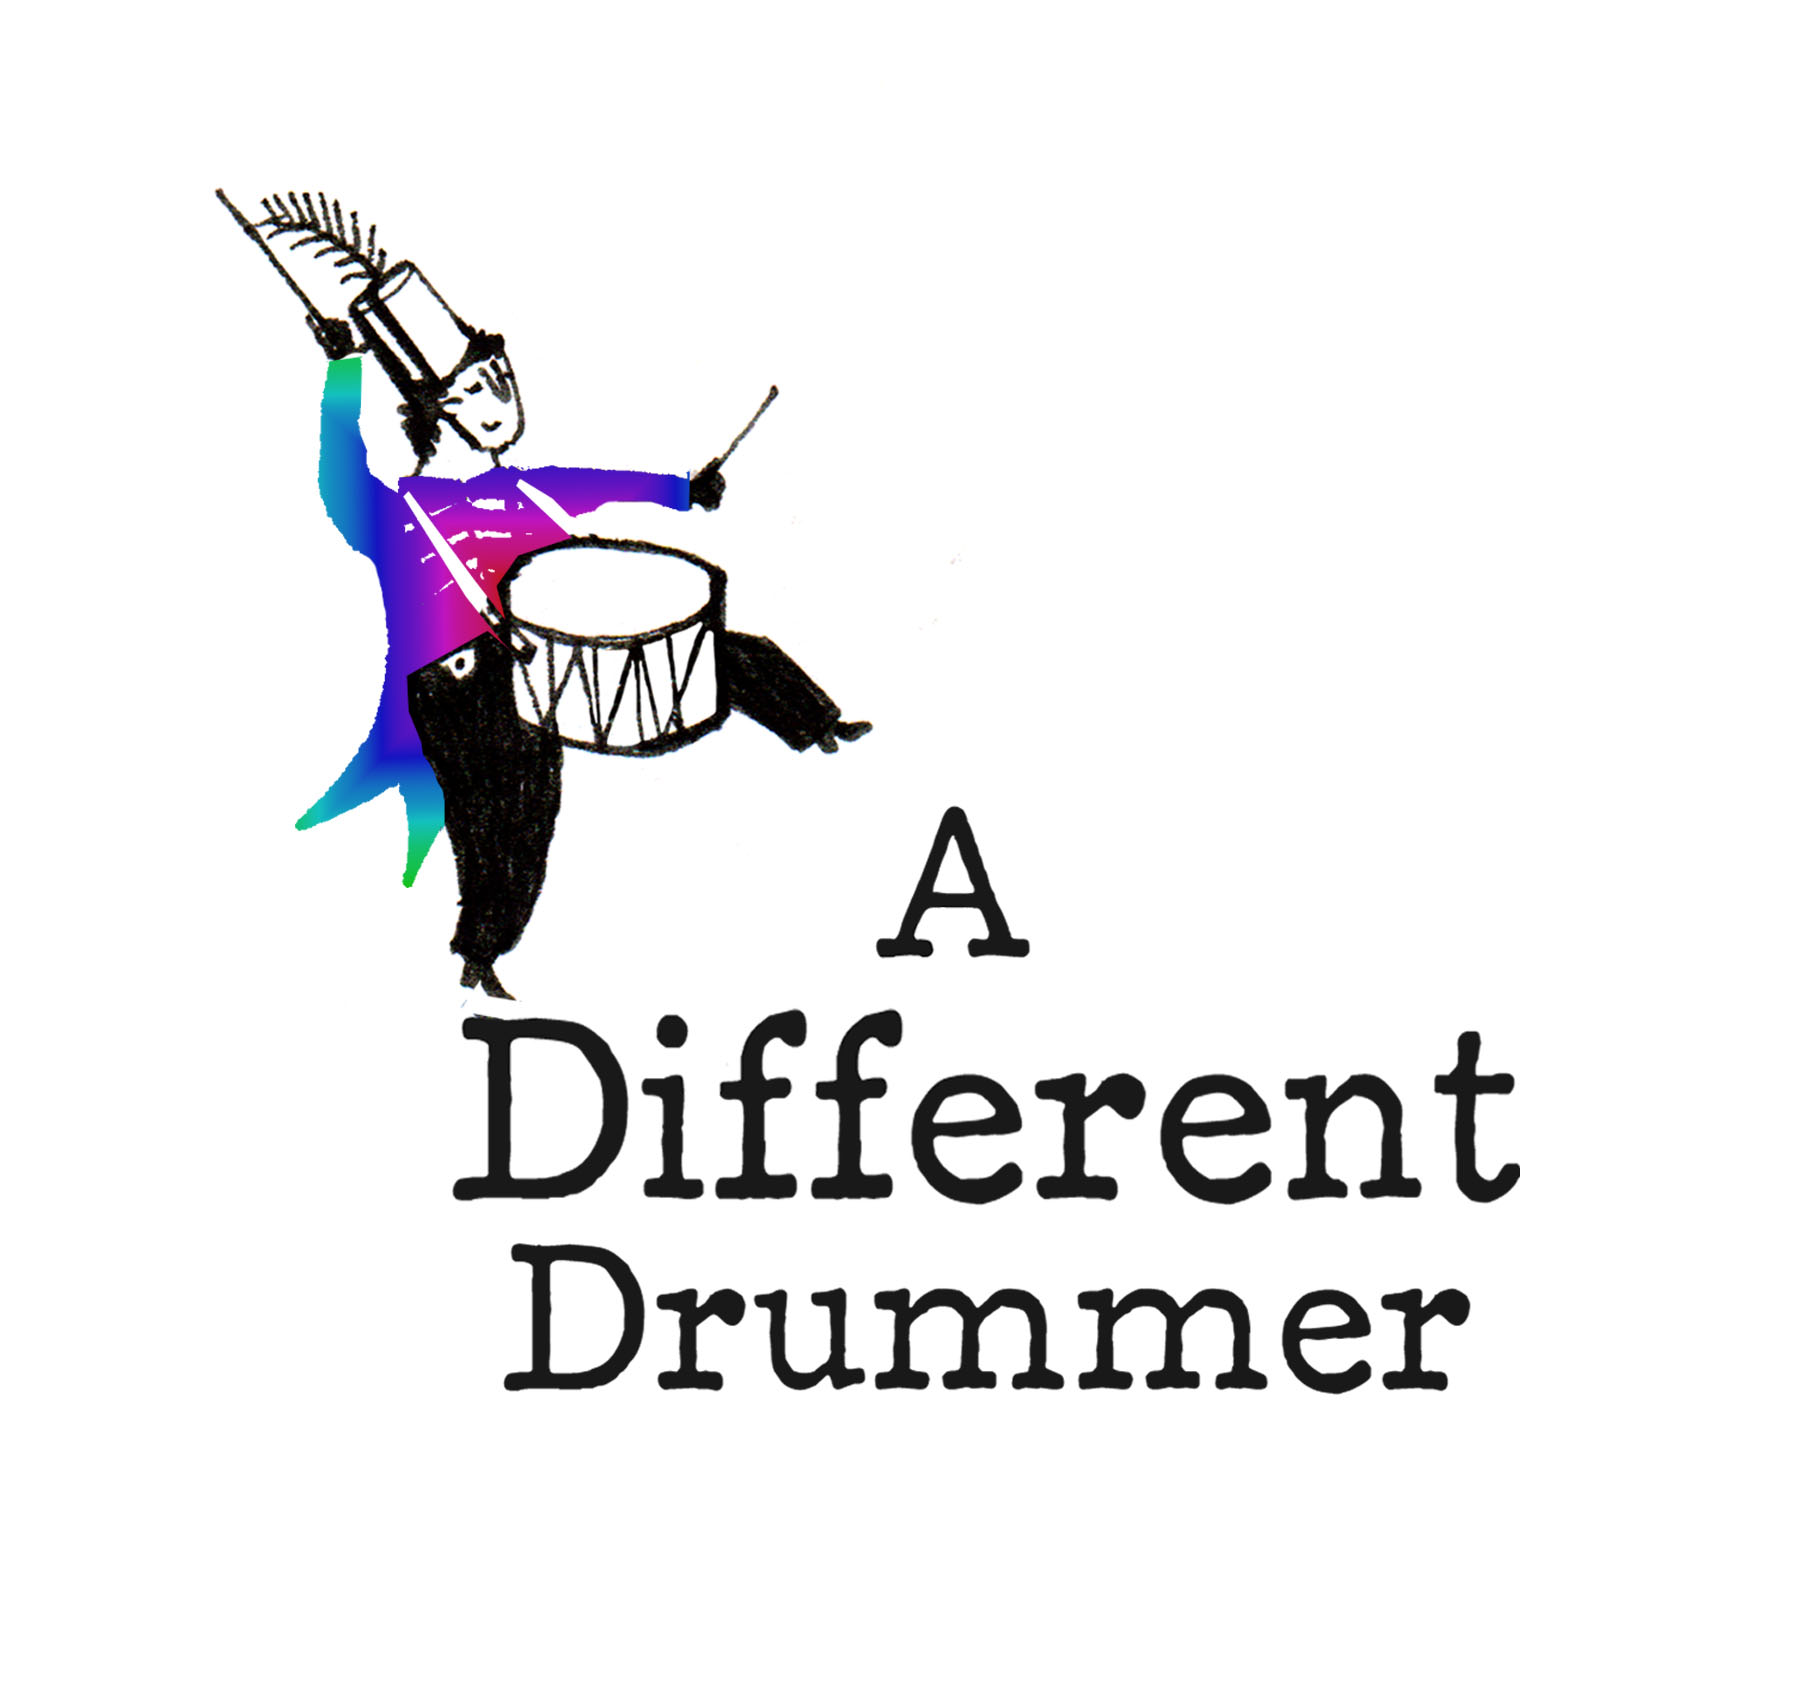 A Different Drummer - Career Guidance